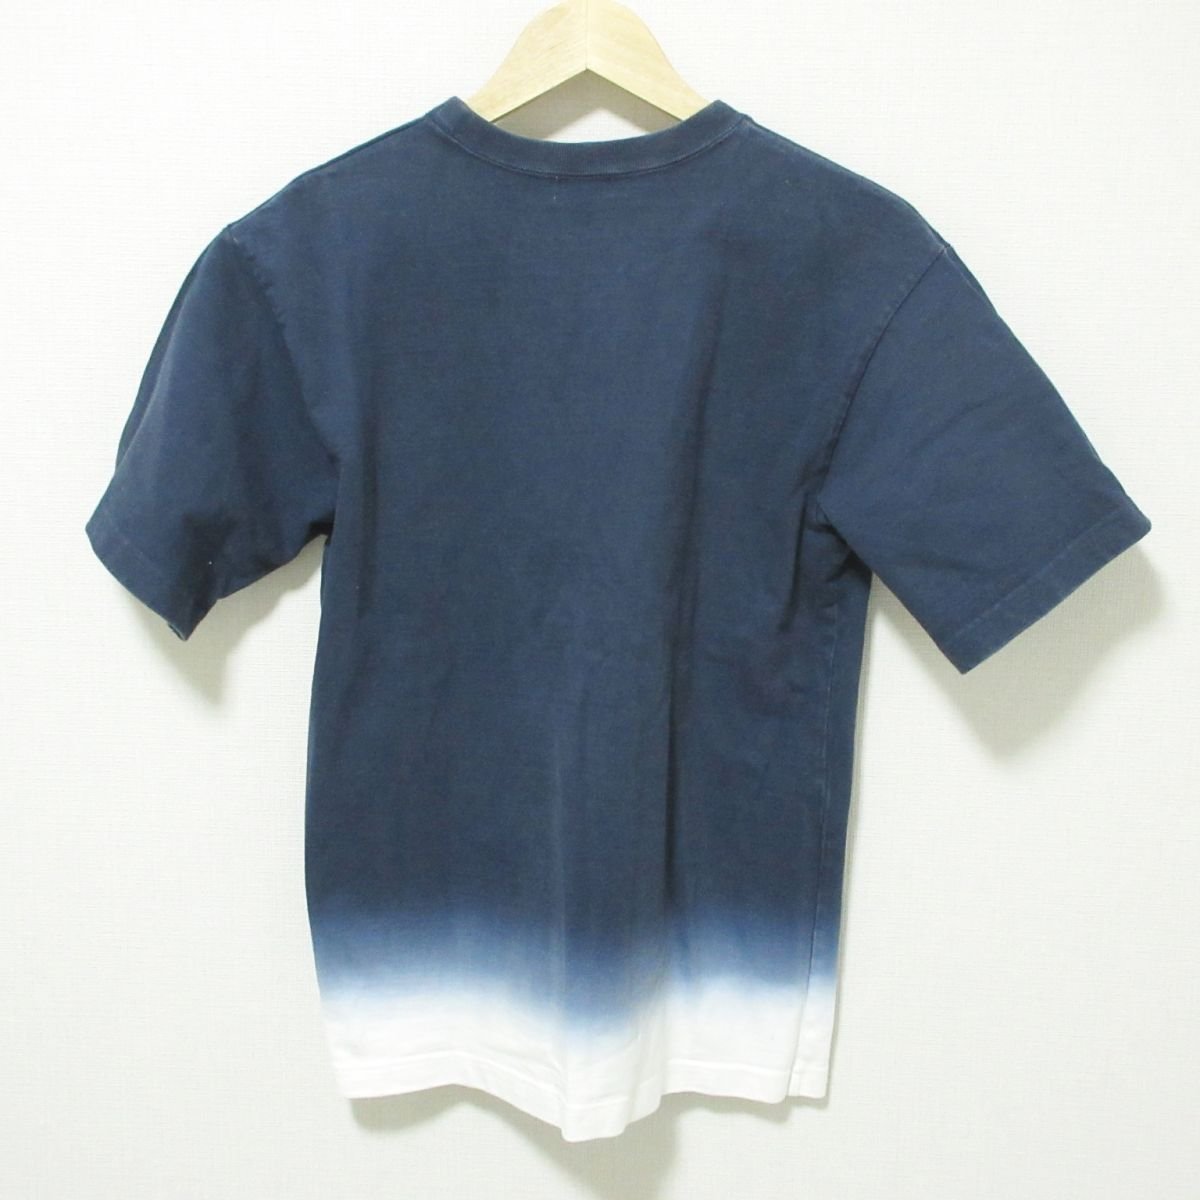  beautiful goods kolor BEACON color beacon gradation short sleeves T-shirt cut and sewn 1 navy × white 112